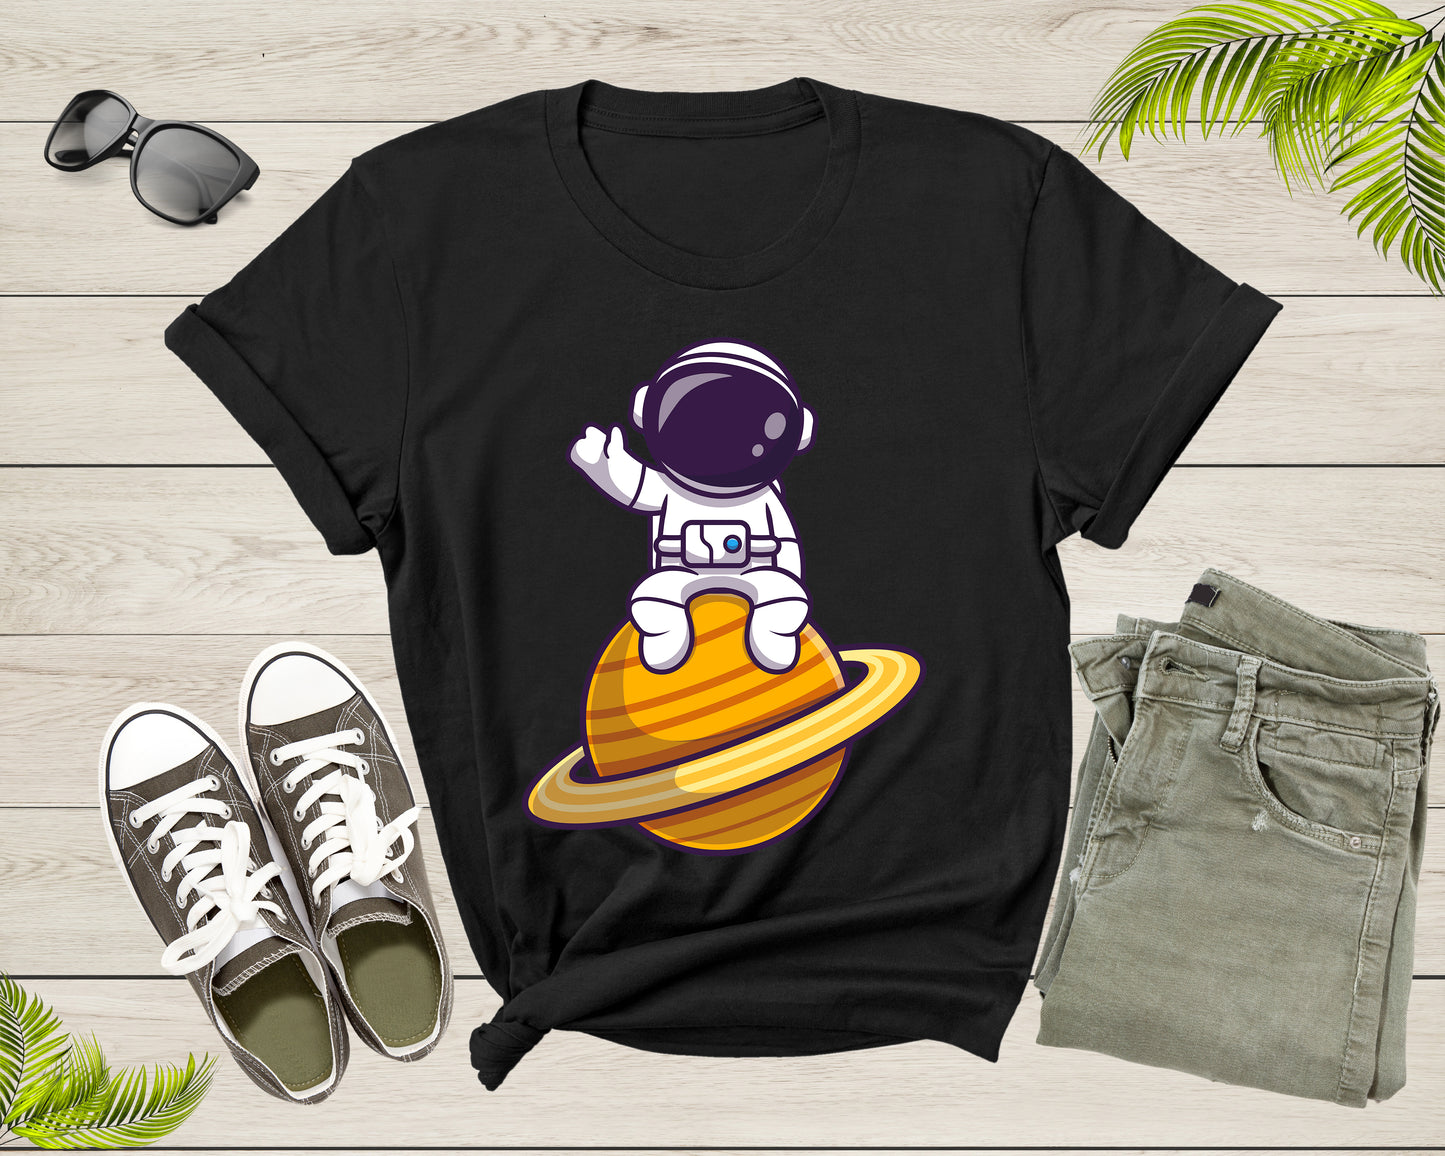 Astronaut Space Lovers Gift Planet Spaceman Graphic Saturn Adult Men Women Kids Boys Girls Shirt Astronaut Birthday Present T-shirt